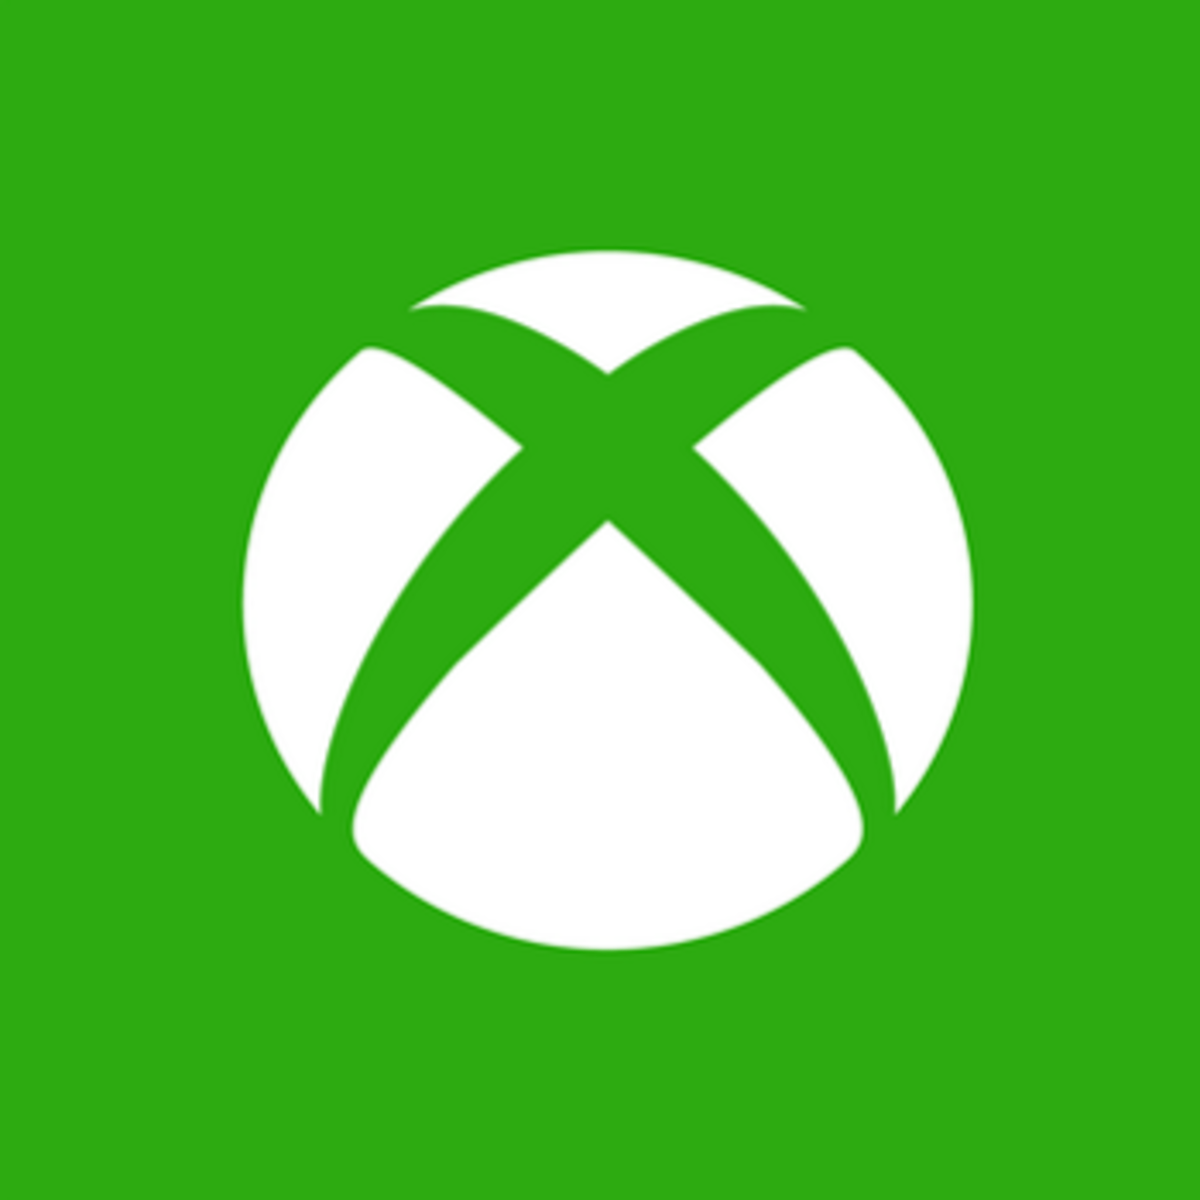 Microsoft Xbox Logo - Xbox hardware revenue down 29% after fall in Q4 sales